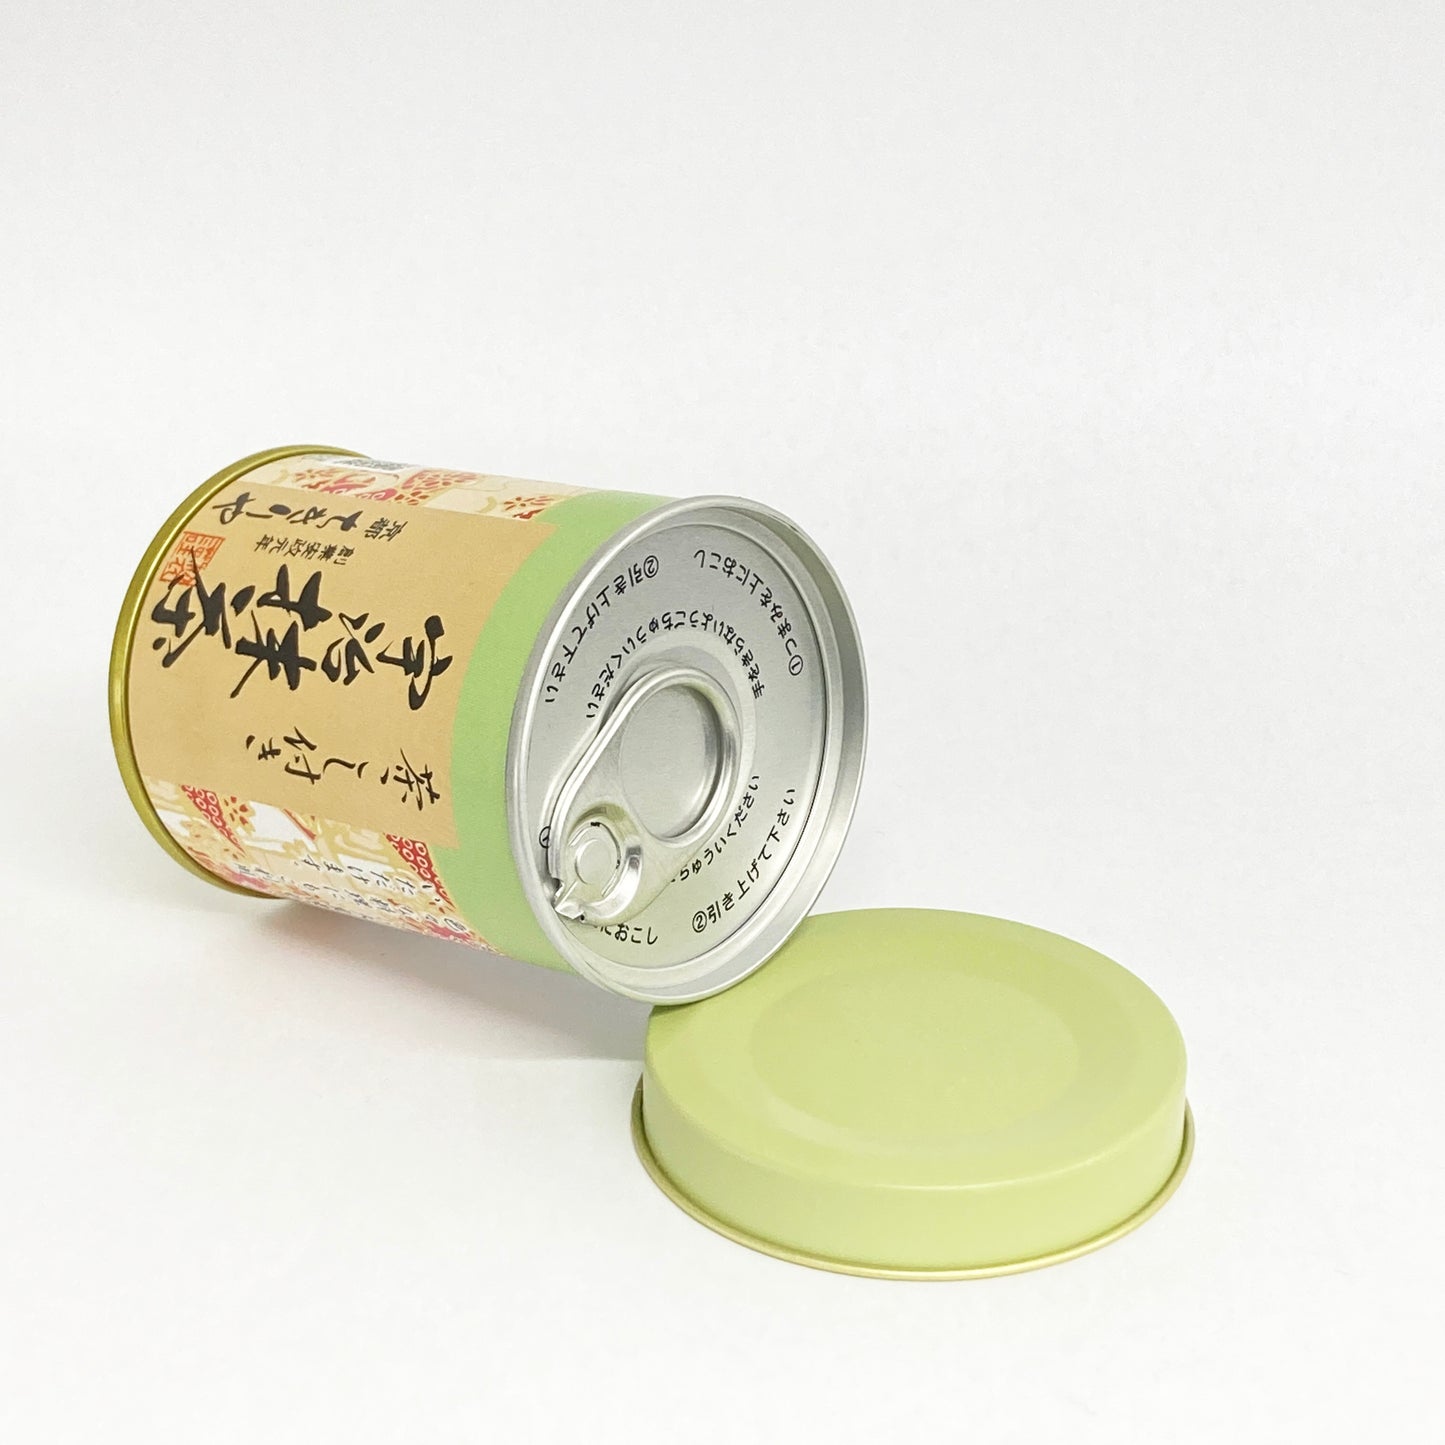 Uji Matcha with tea strainer - 30g green tea powder